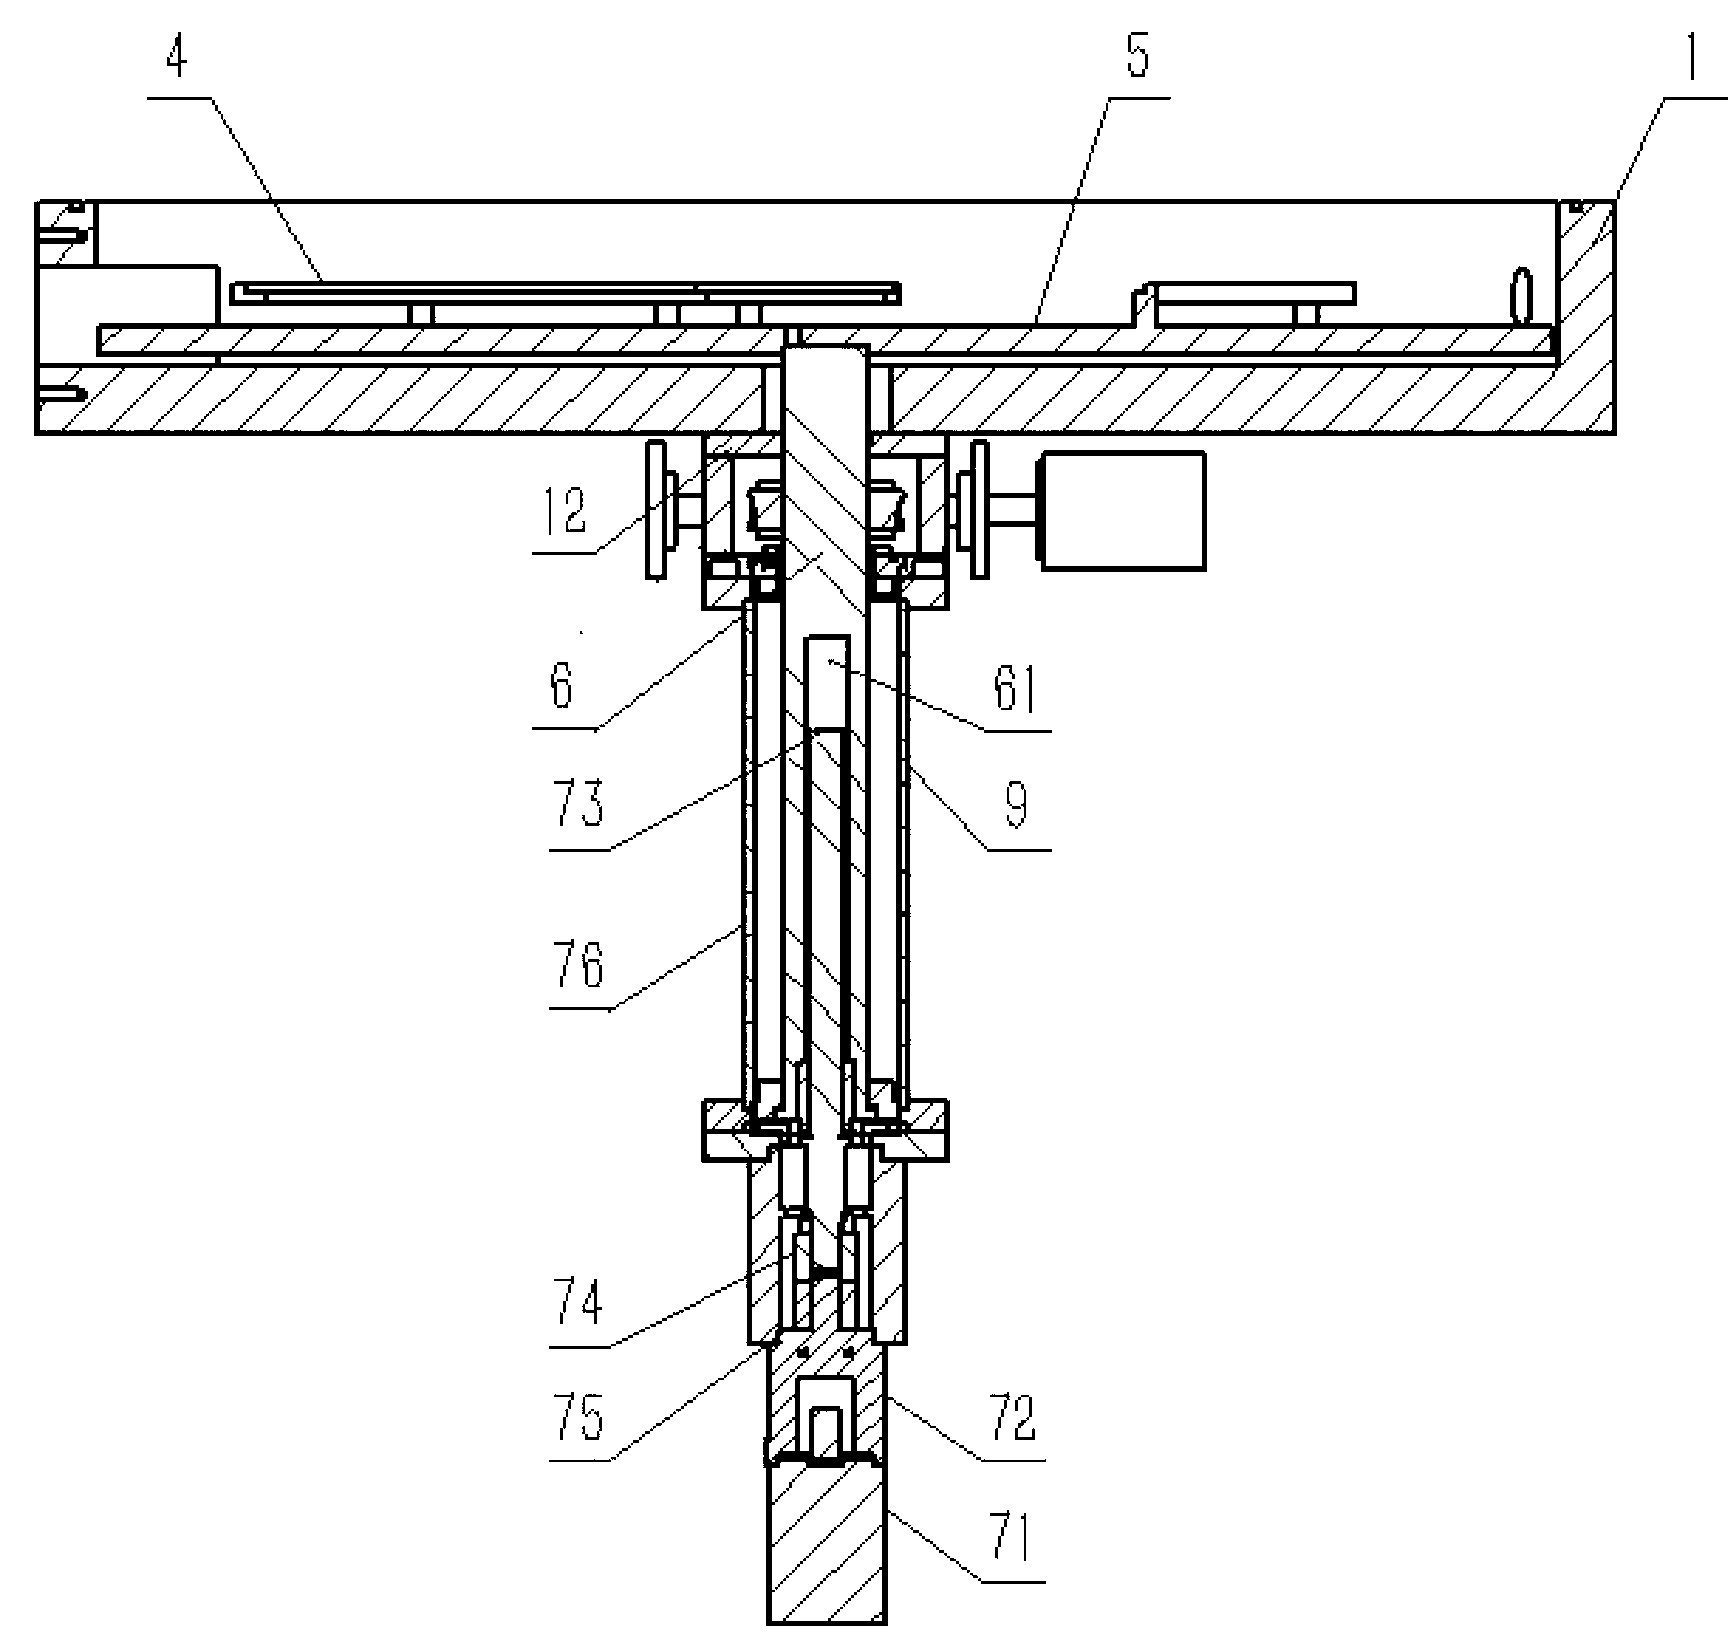 Film spool conveying system of plasma etcher